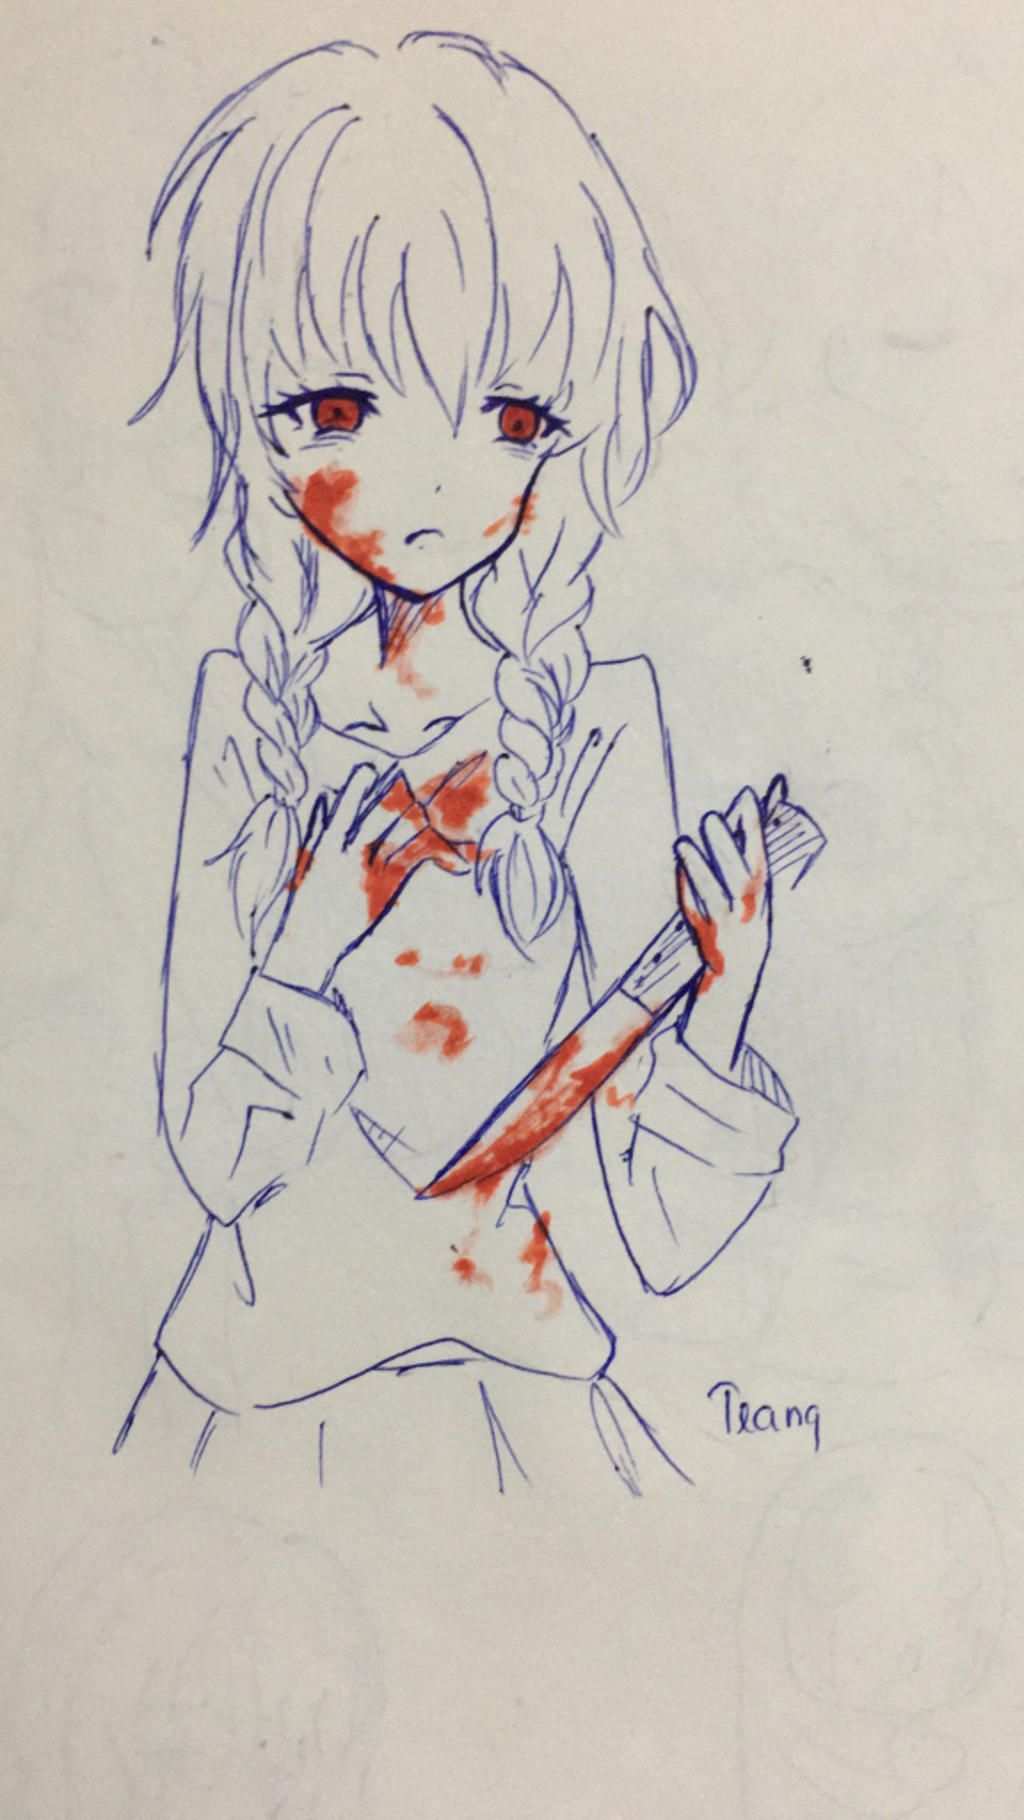 Vẽ anime máu me các kiểu Cầm dao dính máu nhoa Vẽ đẹp nha .-. câu ...